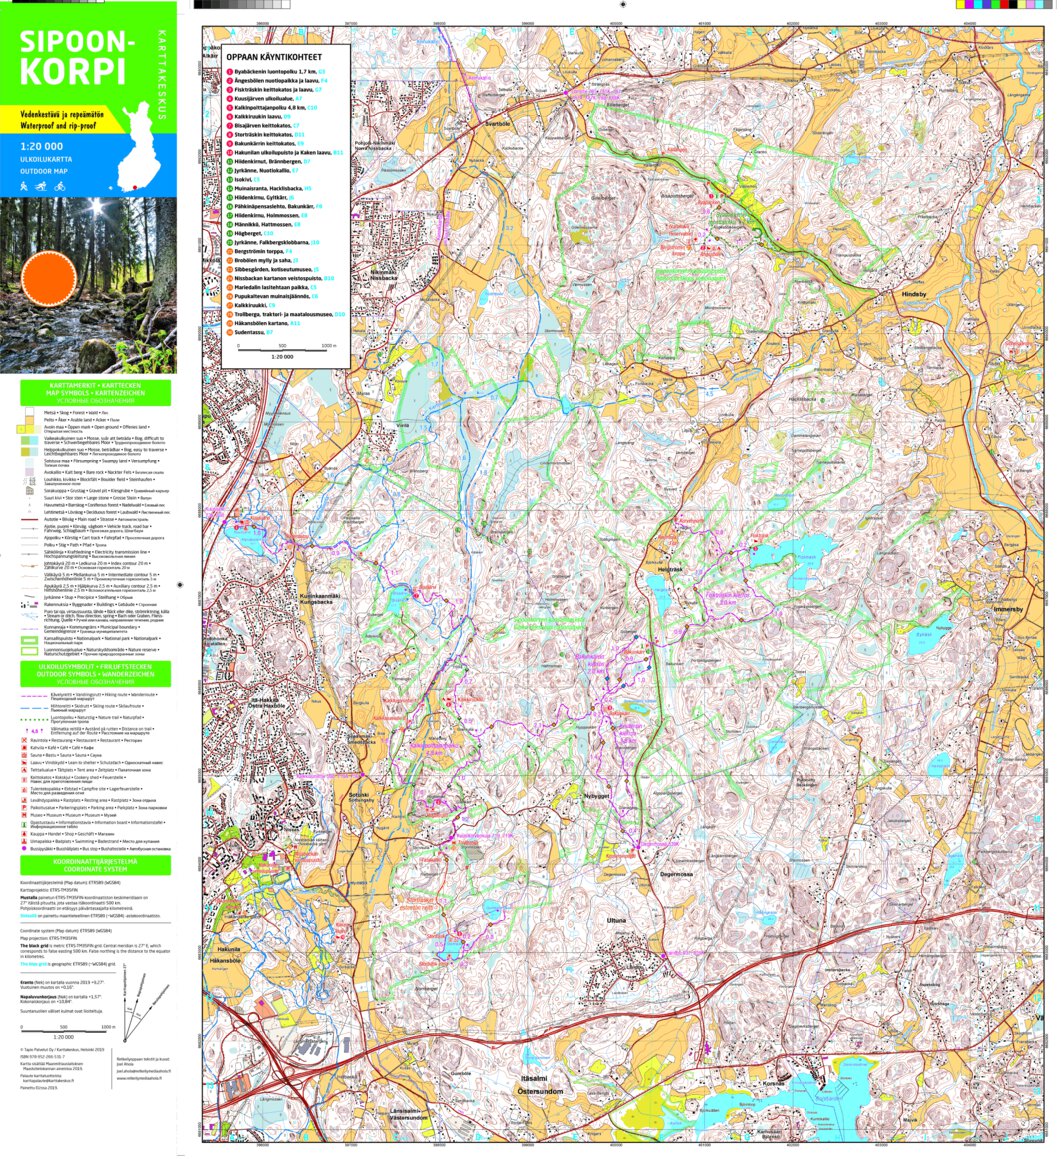 Sipoonkorpi 1:20 000 map by Tapio Palvelut Oy / Karttakeskus - Avenza Maps  | Avenza Maps